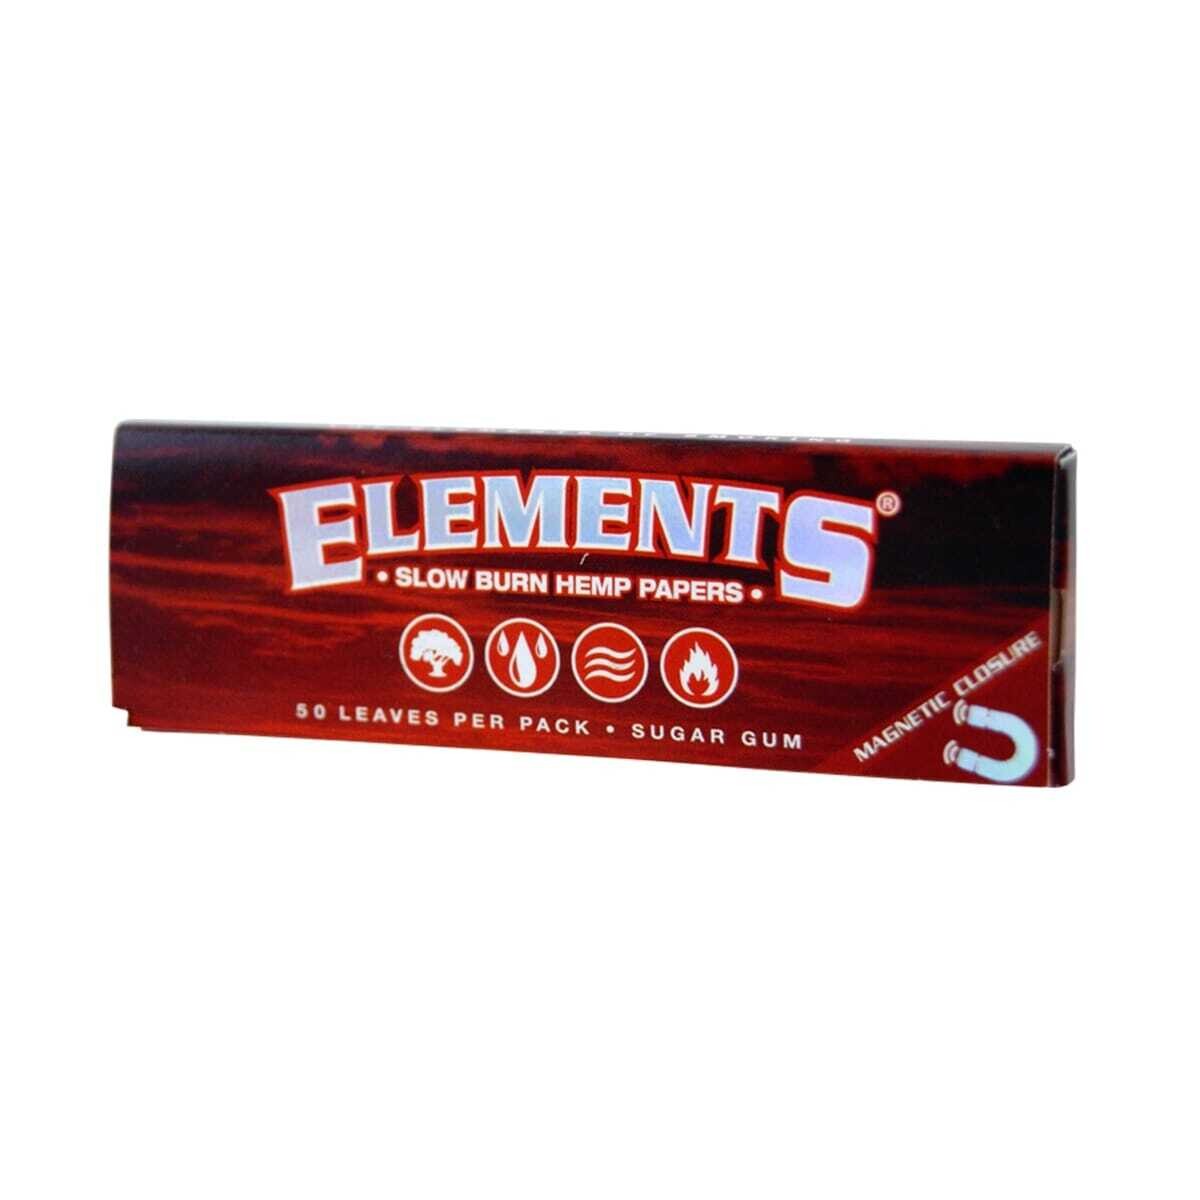 Elements - RED 1 1/4 Slow Burn Hemp